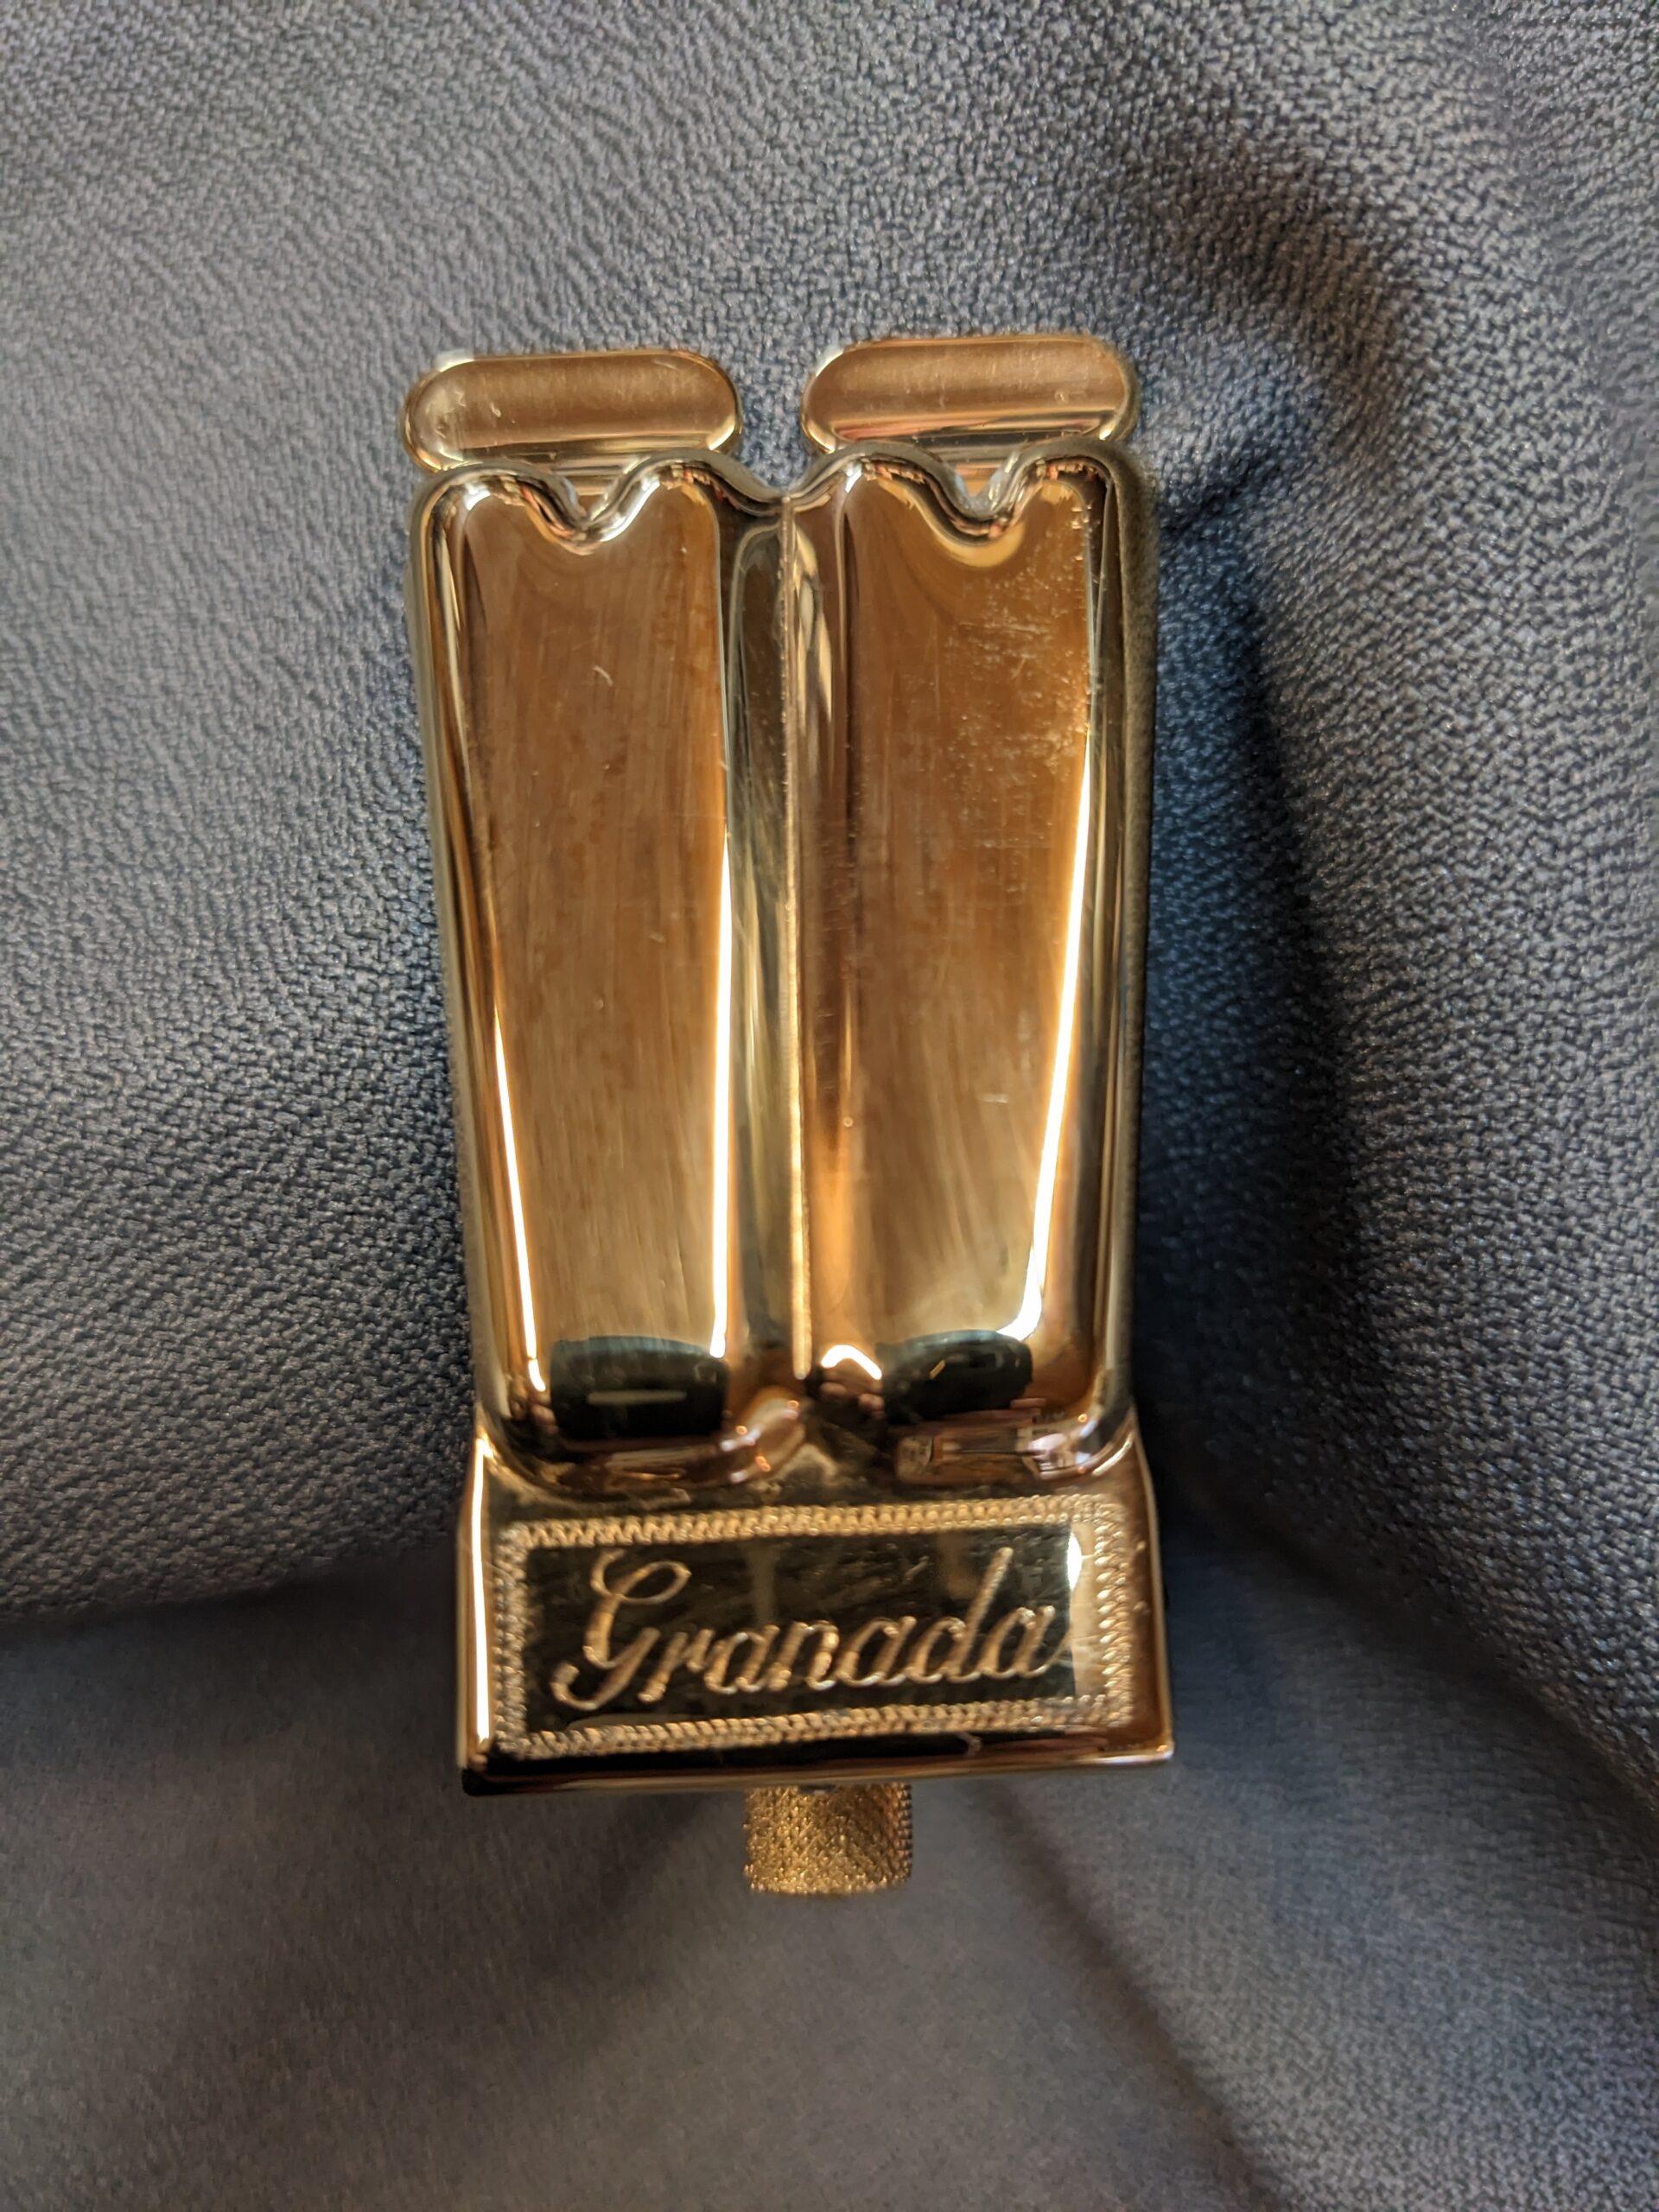 2-Hump Gold Engraved “Granada” Product